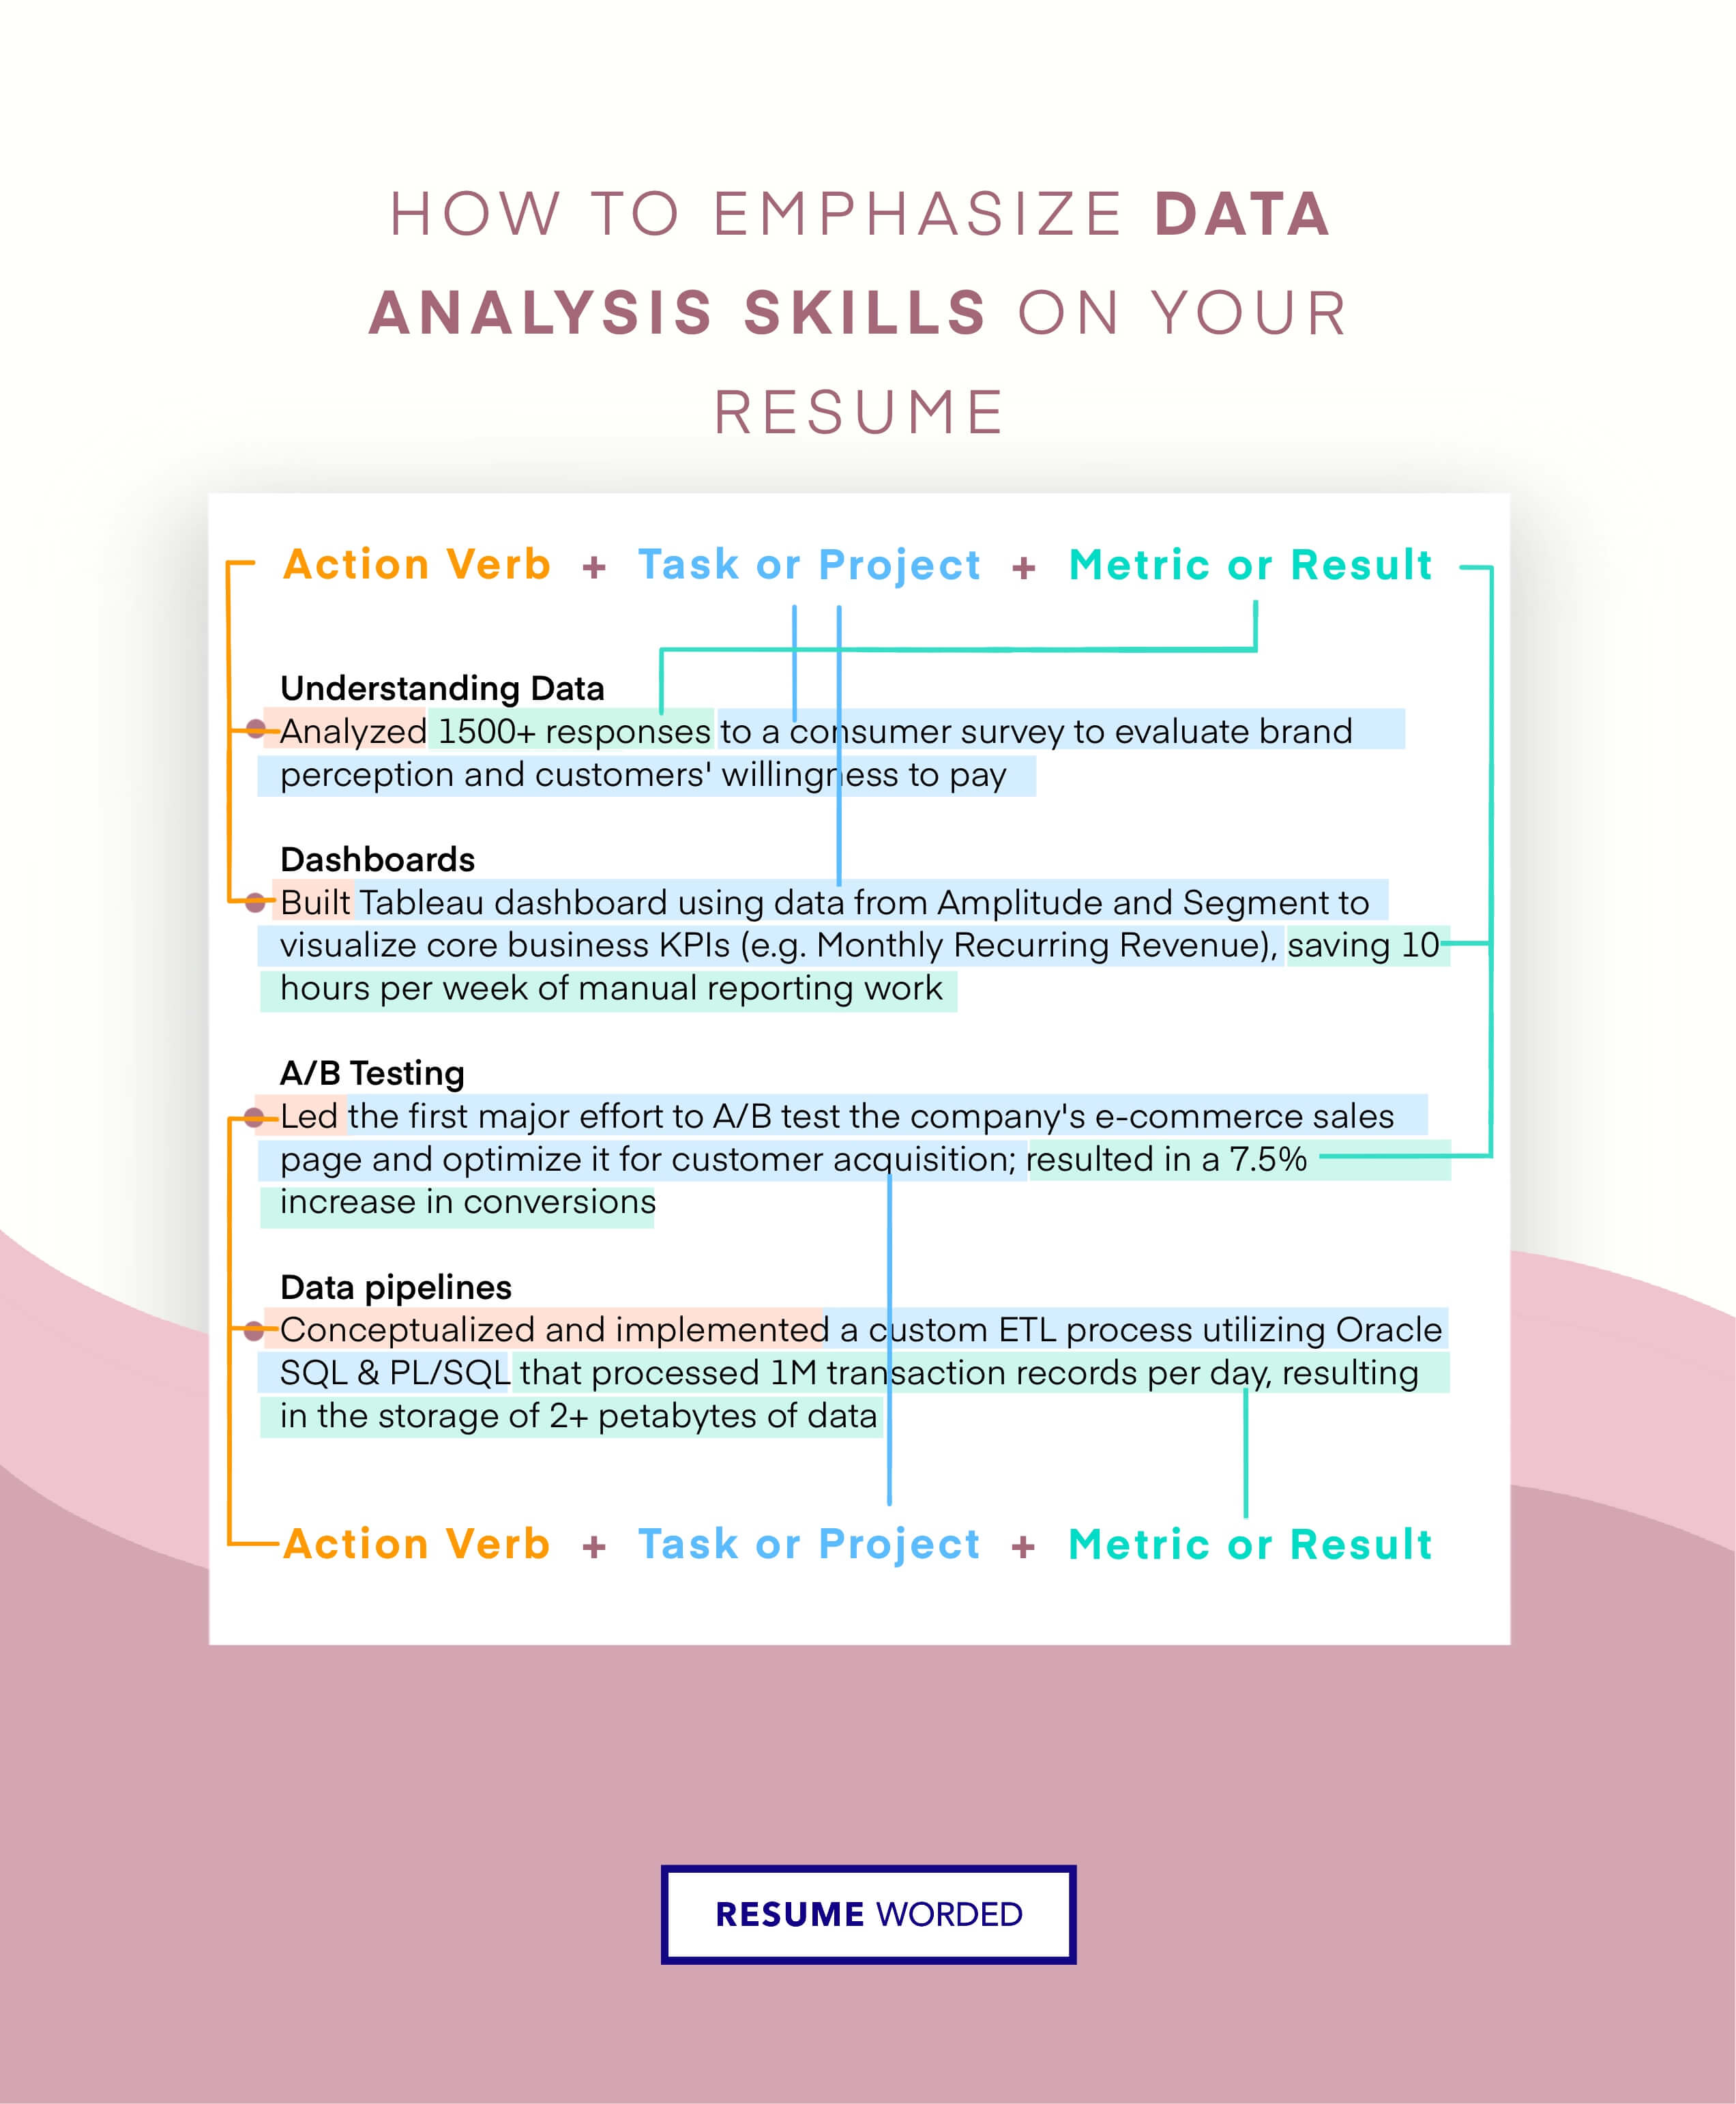 Emphasize your data entry skills - Data Entry Analyst Resume